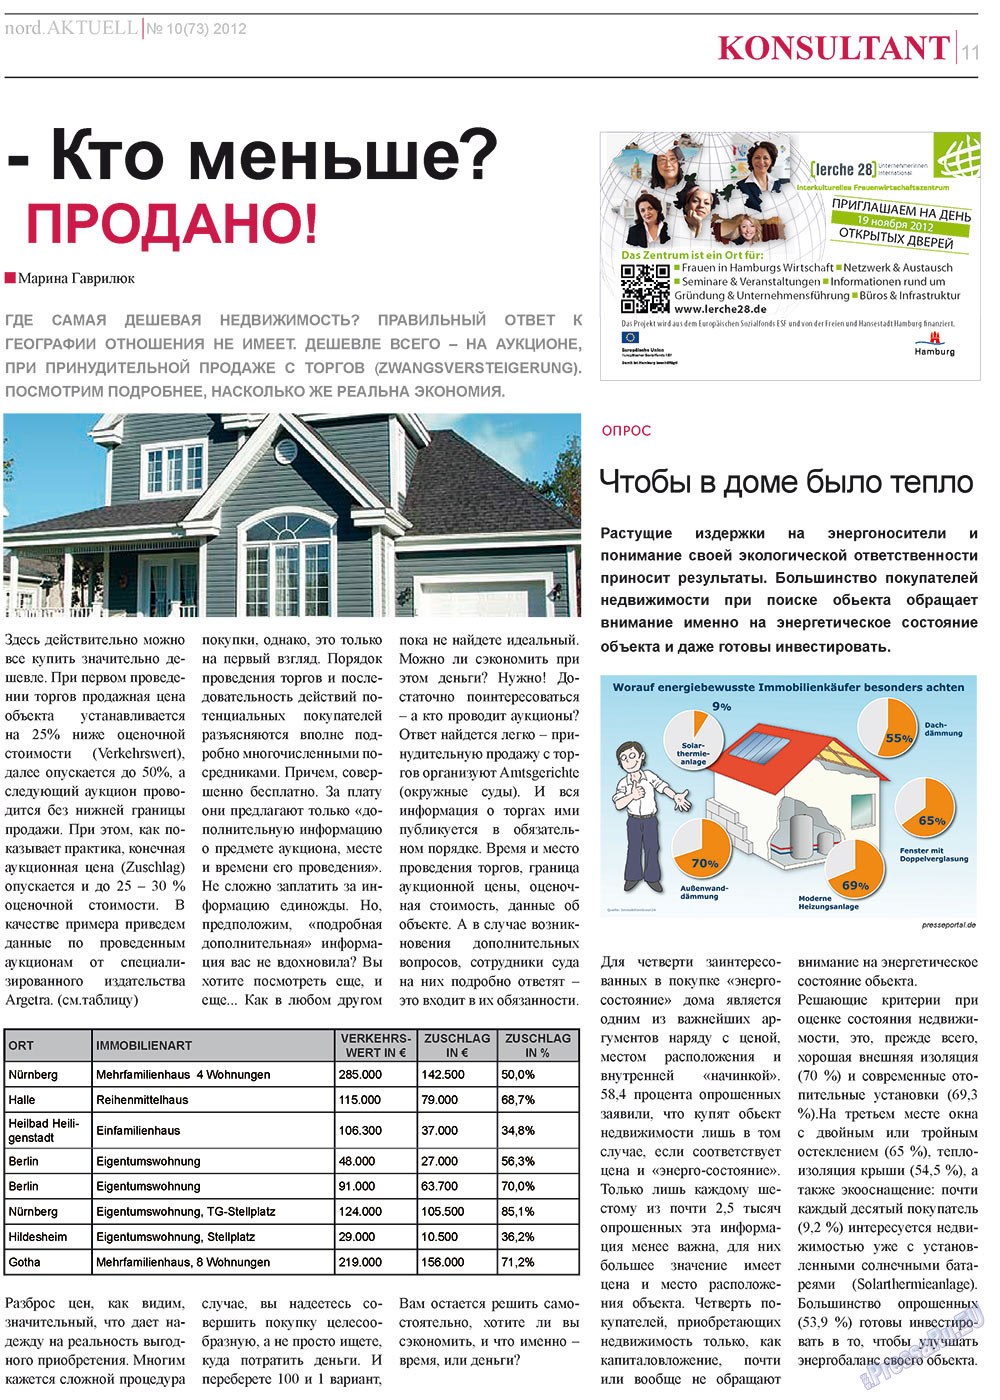 nord.Aktuell (газета). 2012 год, номер 10, стр. 11